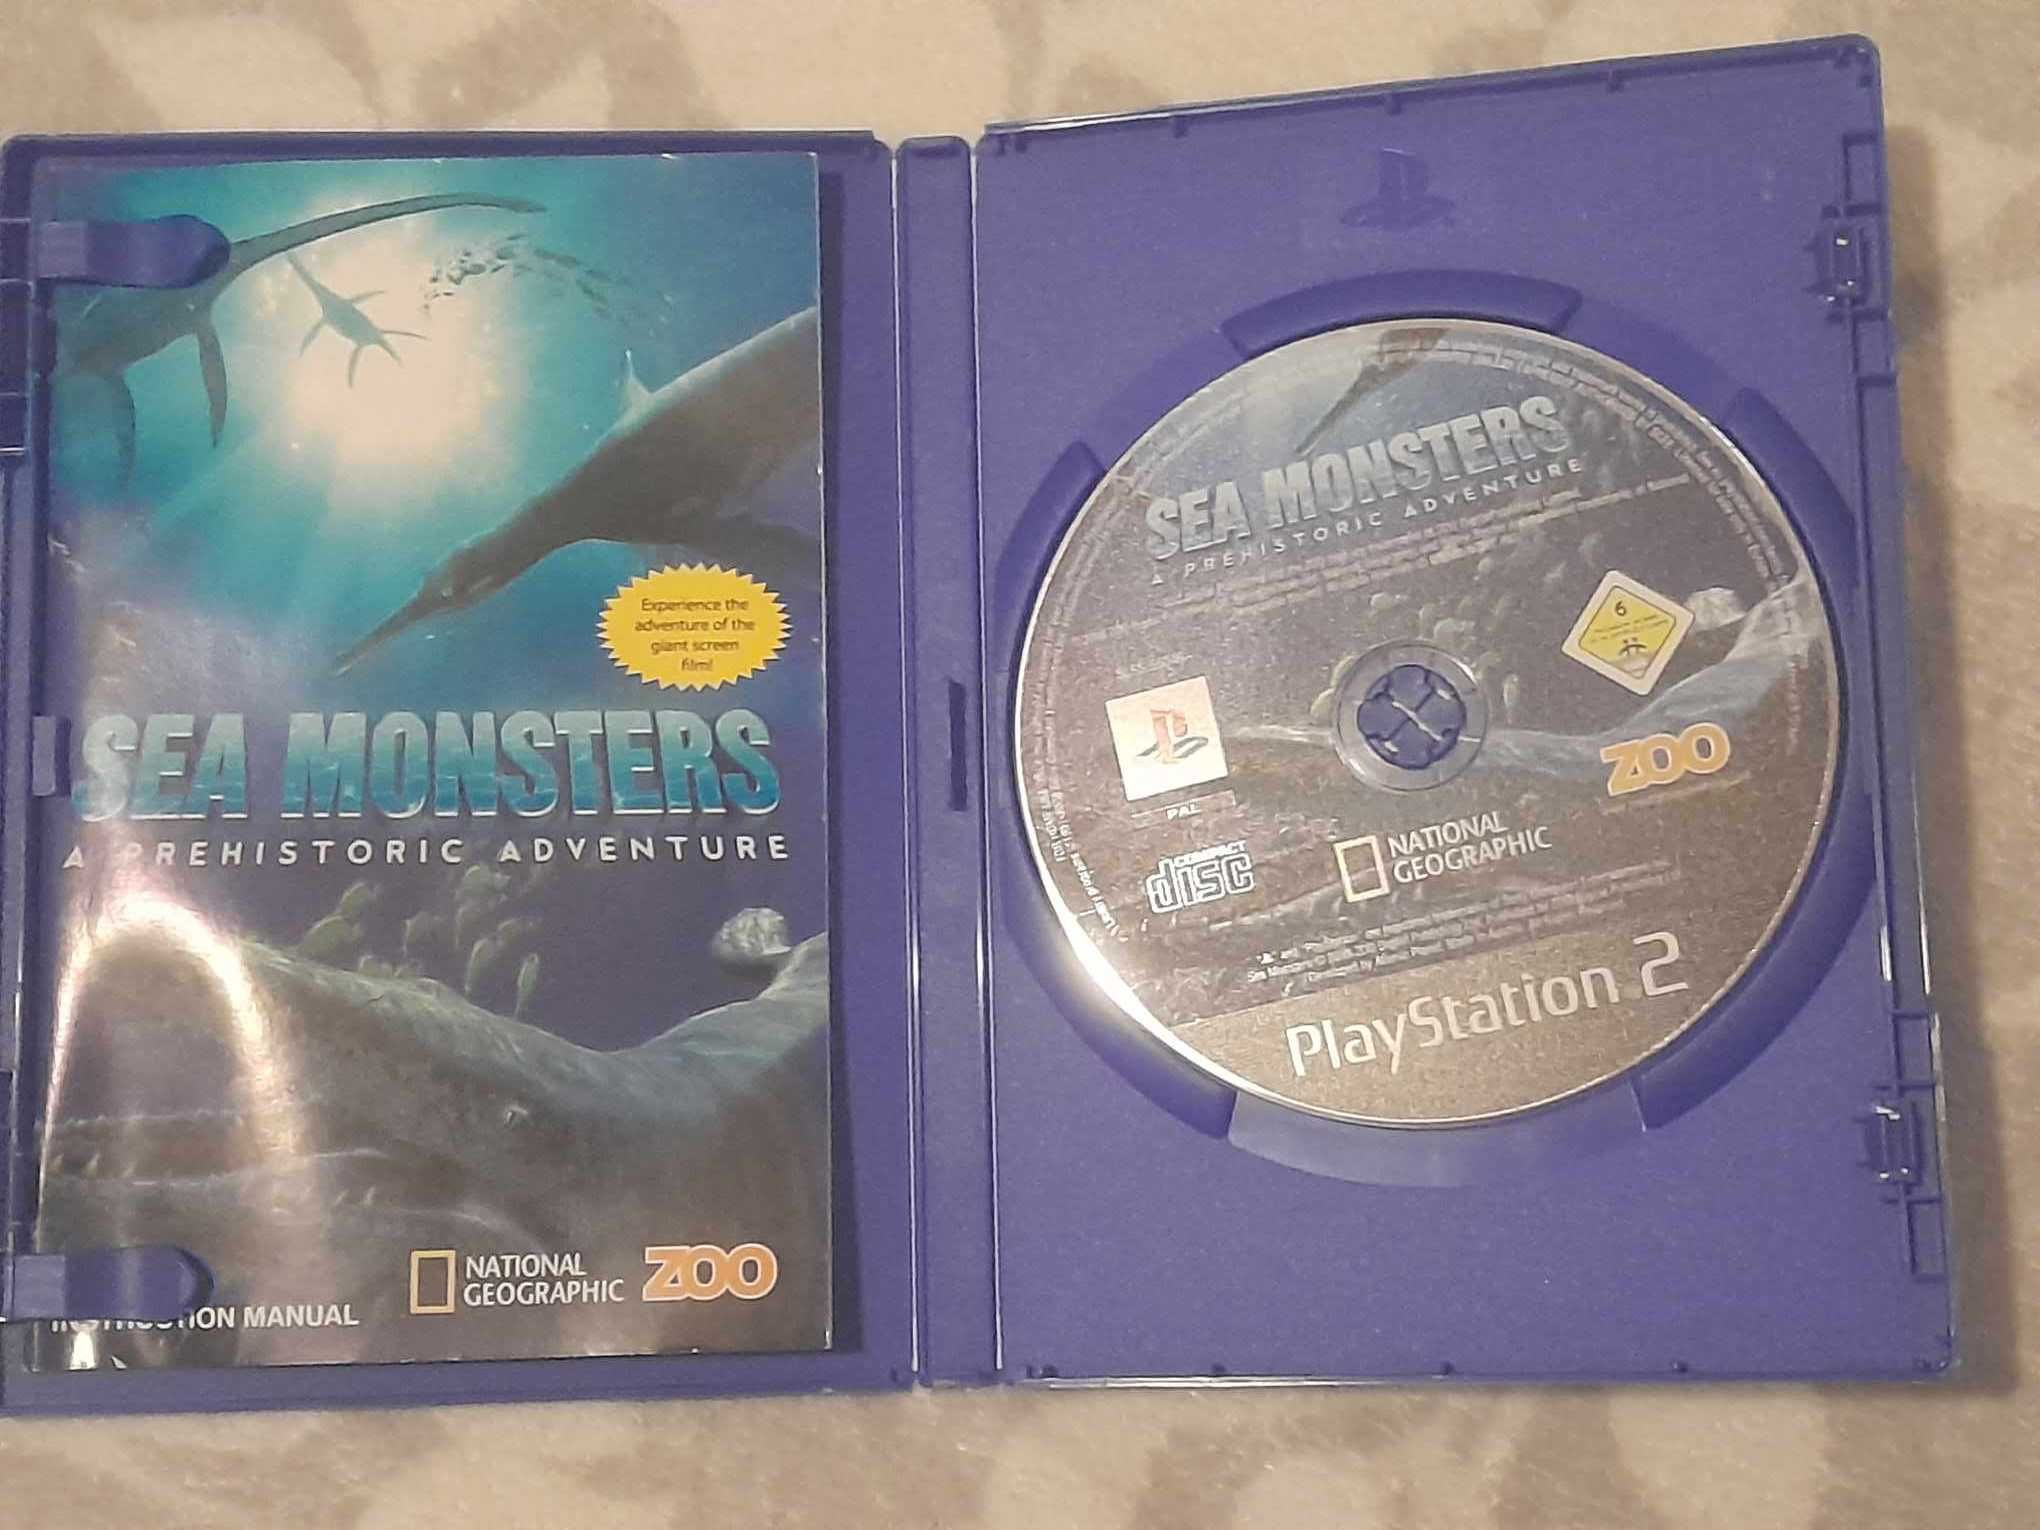 Sea Monsters: A Prehistoric Adventure - Playstation 2